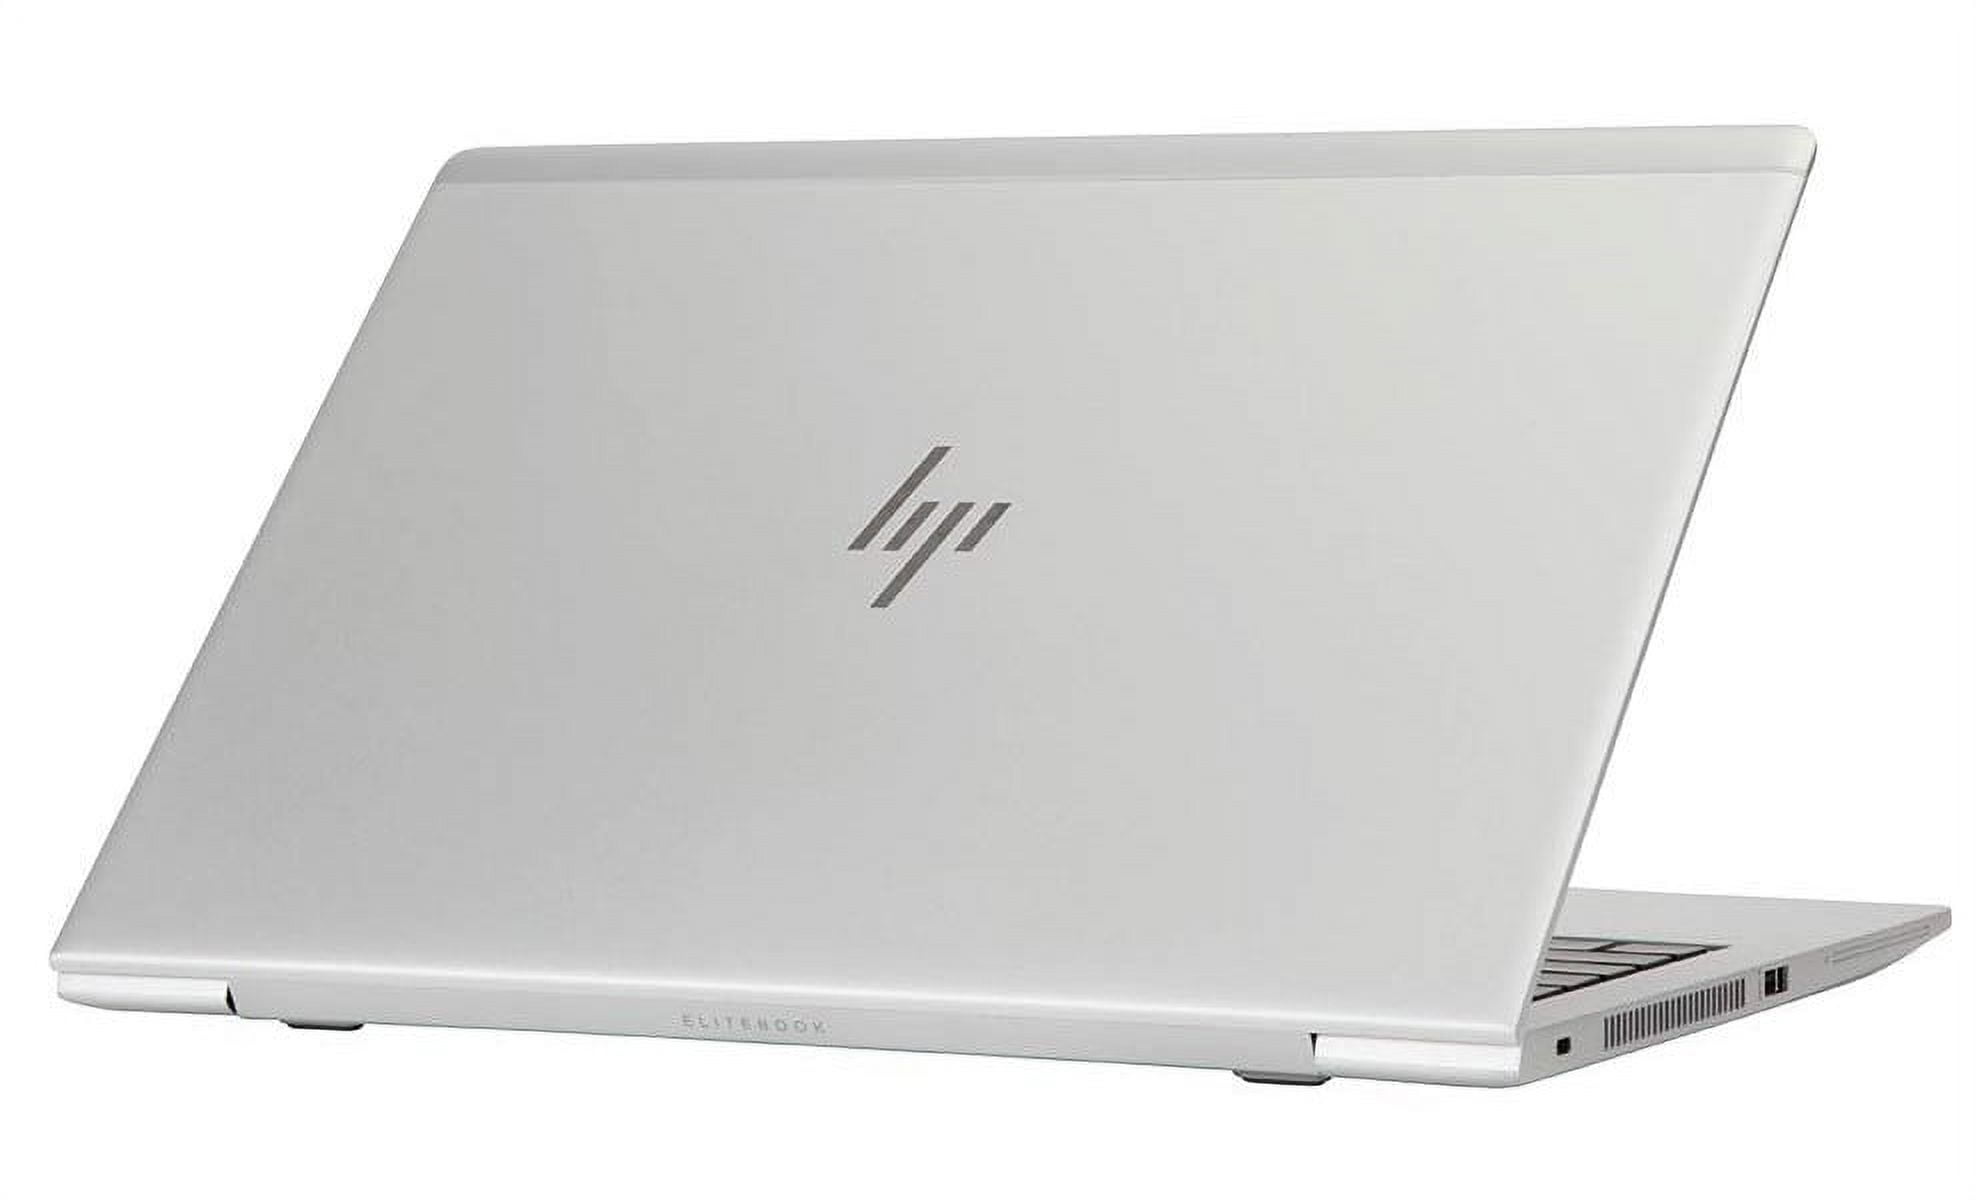 Refurbished HP EliteBook 840 G6 i7 8565U Laptop